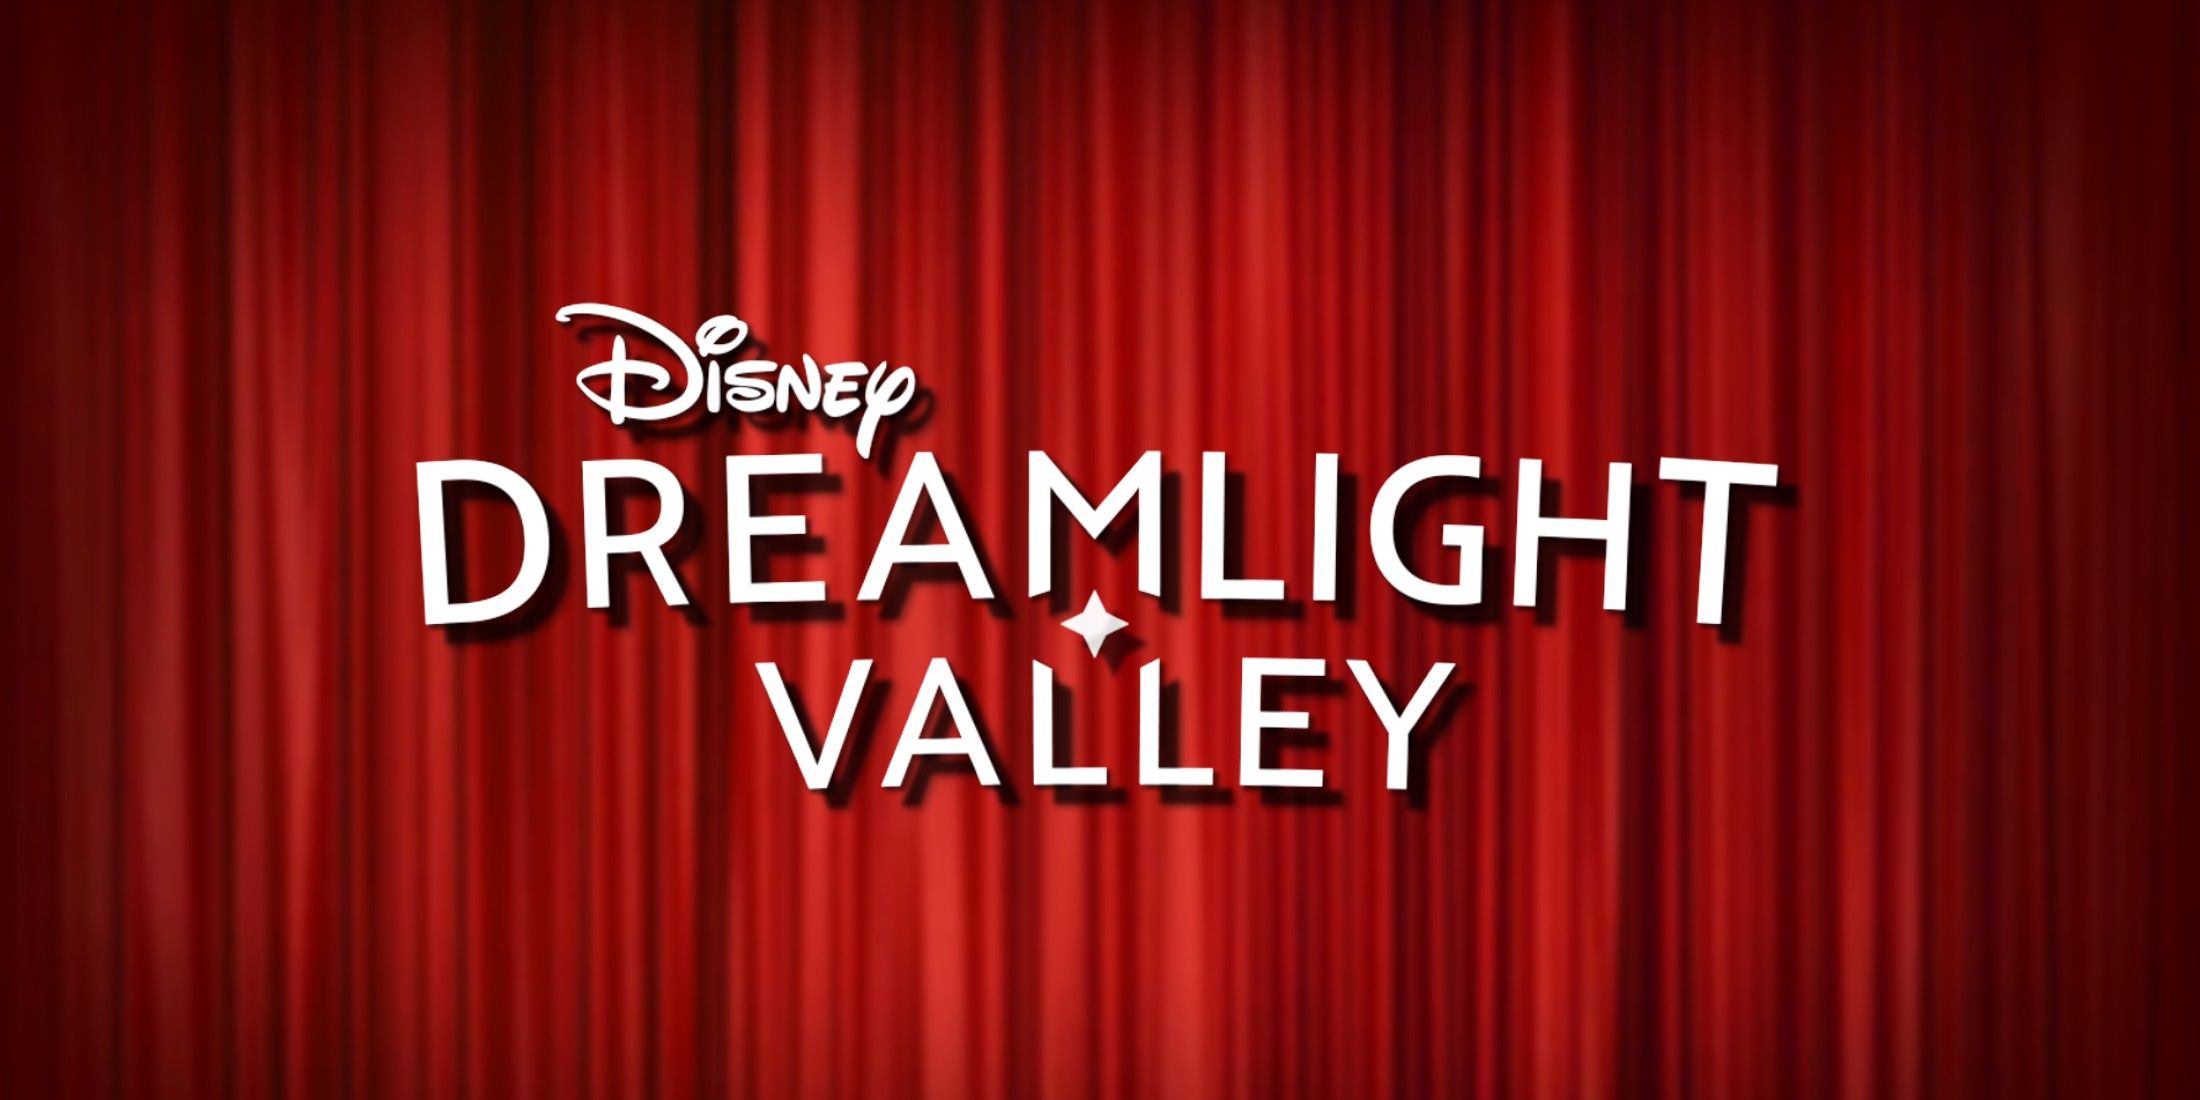 disney-dreamlight-valley-survey-muppets-star-wars-tease